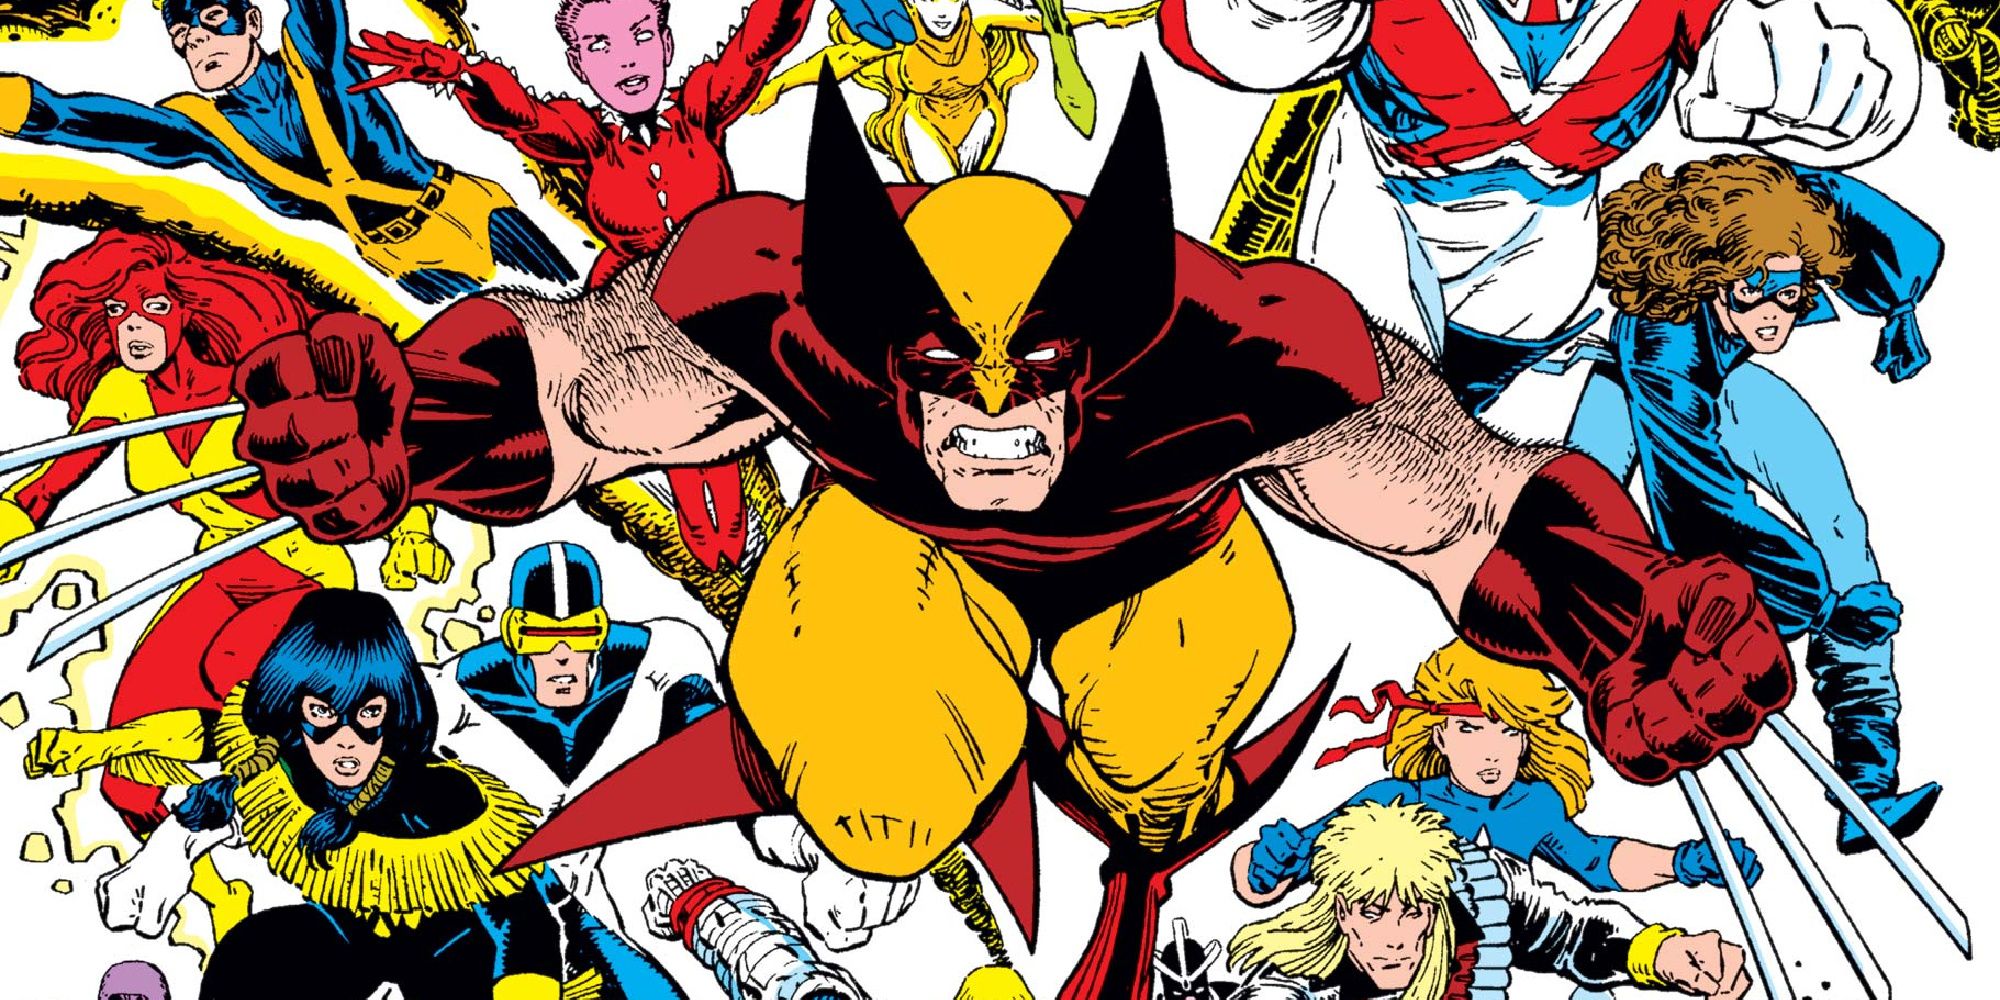 The X-Men drawn by Art Adams in Marvel Comics.